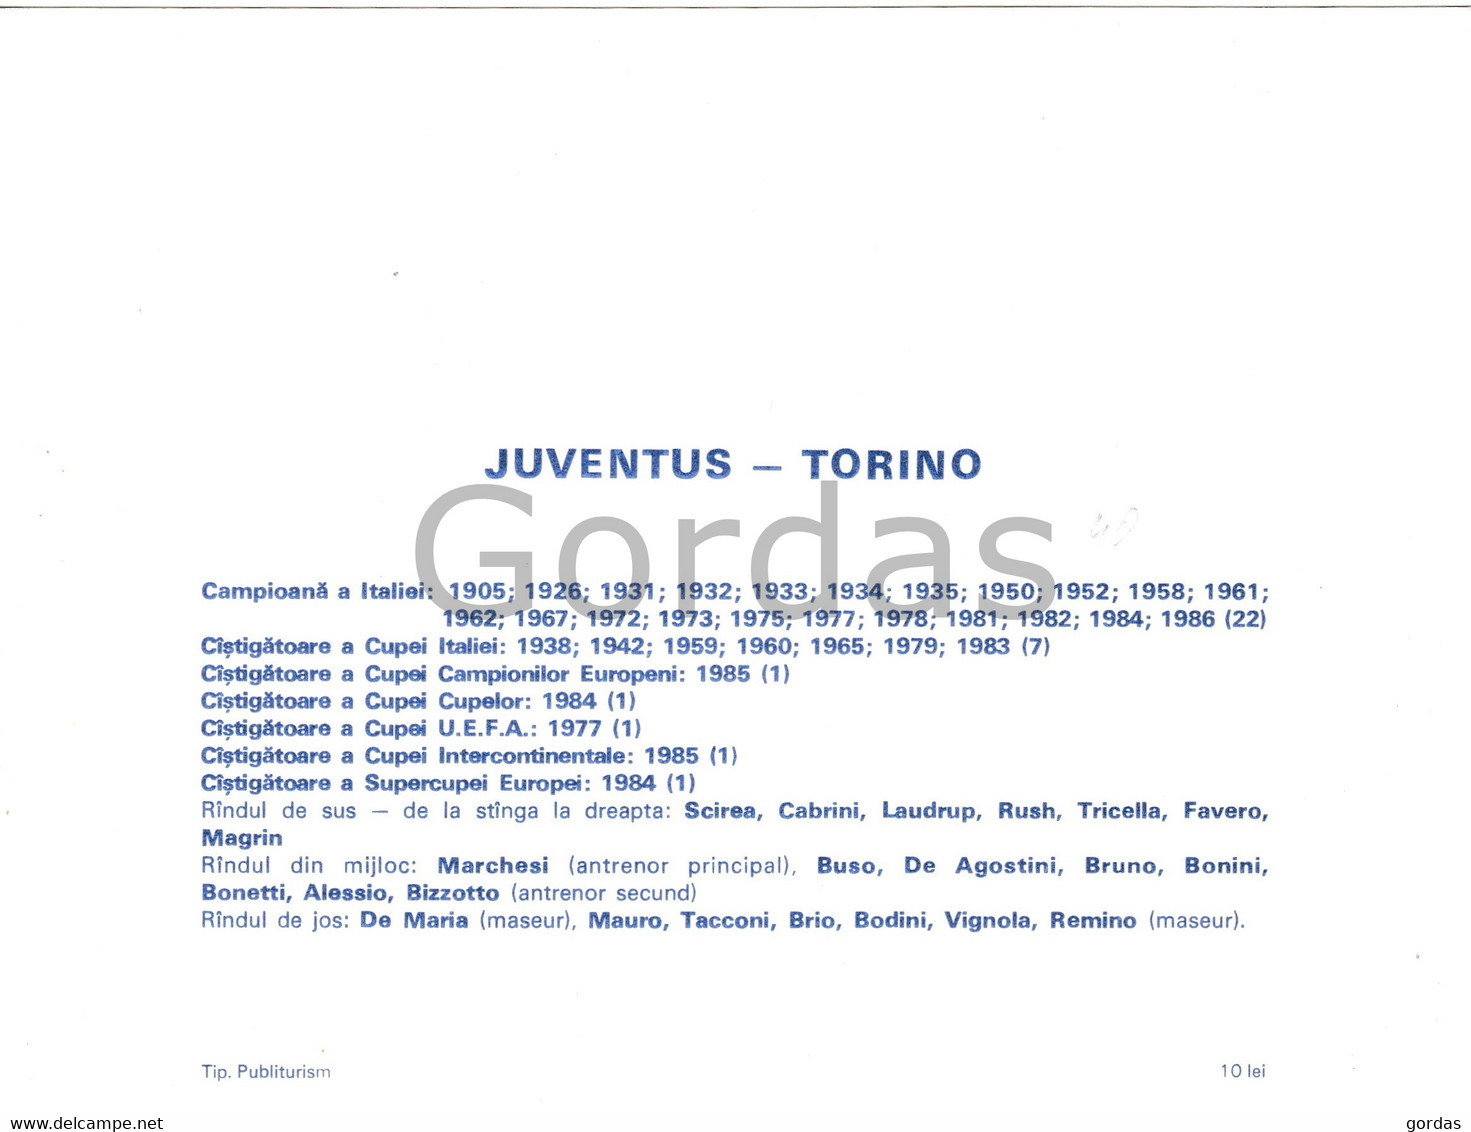 Juventus Torino - Football - Soccer - Photo 200x150mm - Stadiums & Sporting Infrastructures